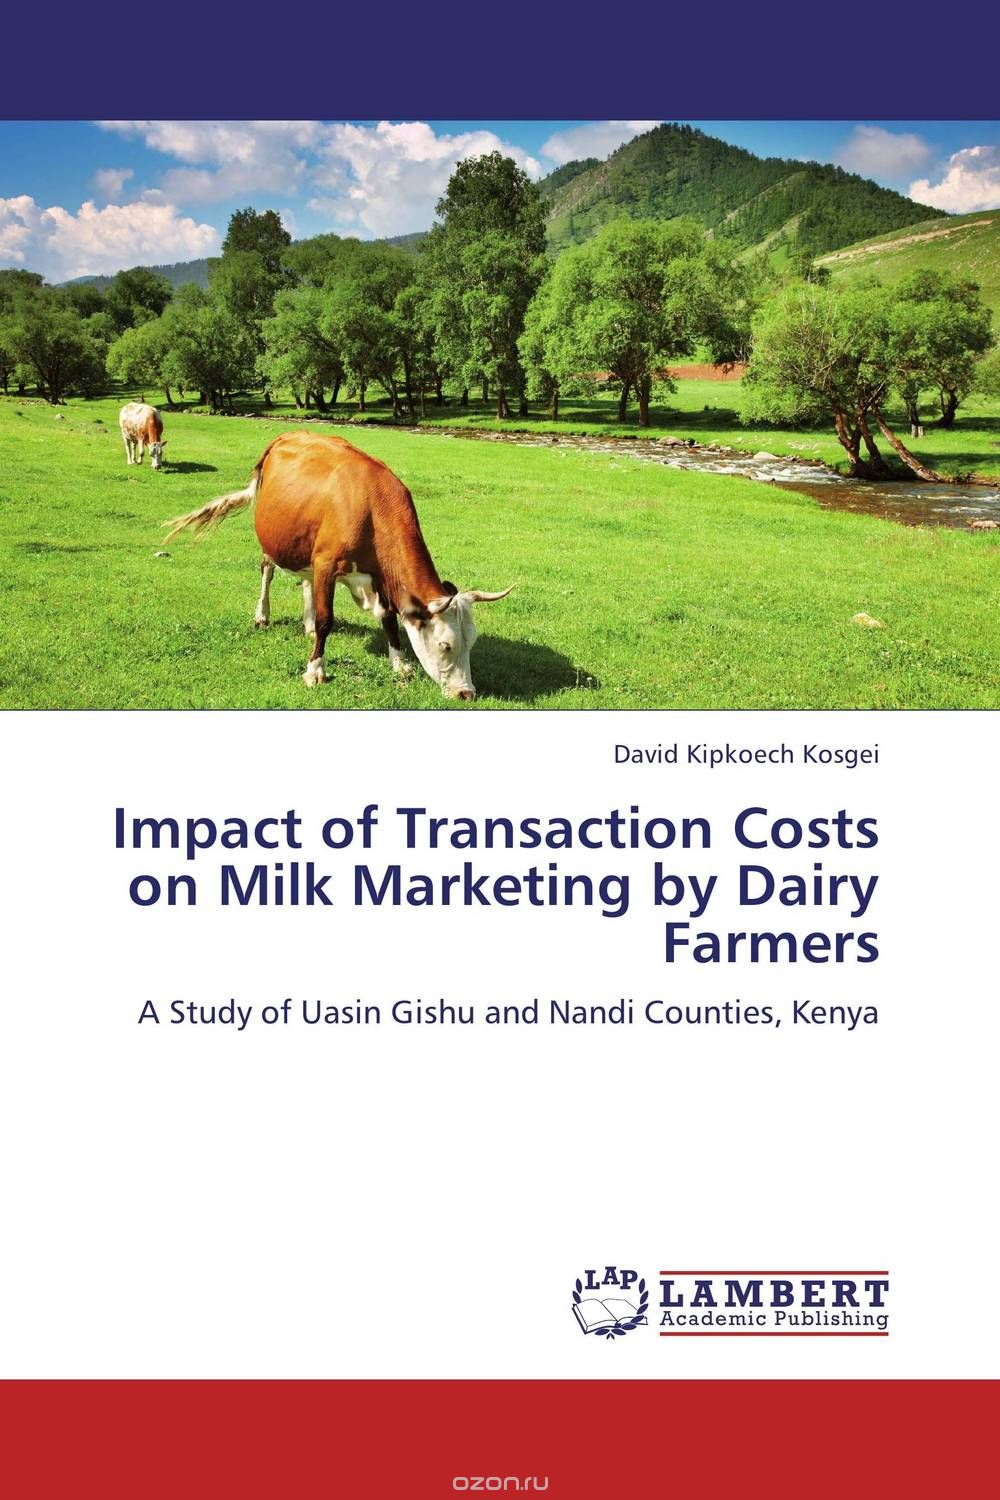 Скачать книгу "Impact of Transaction Costs on Milk Marketing by Dairy Farmers"